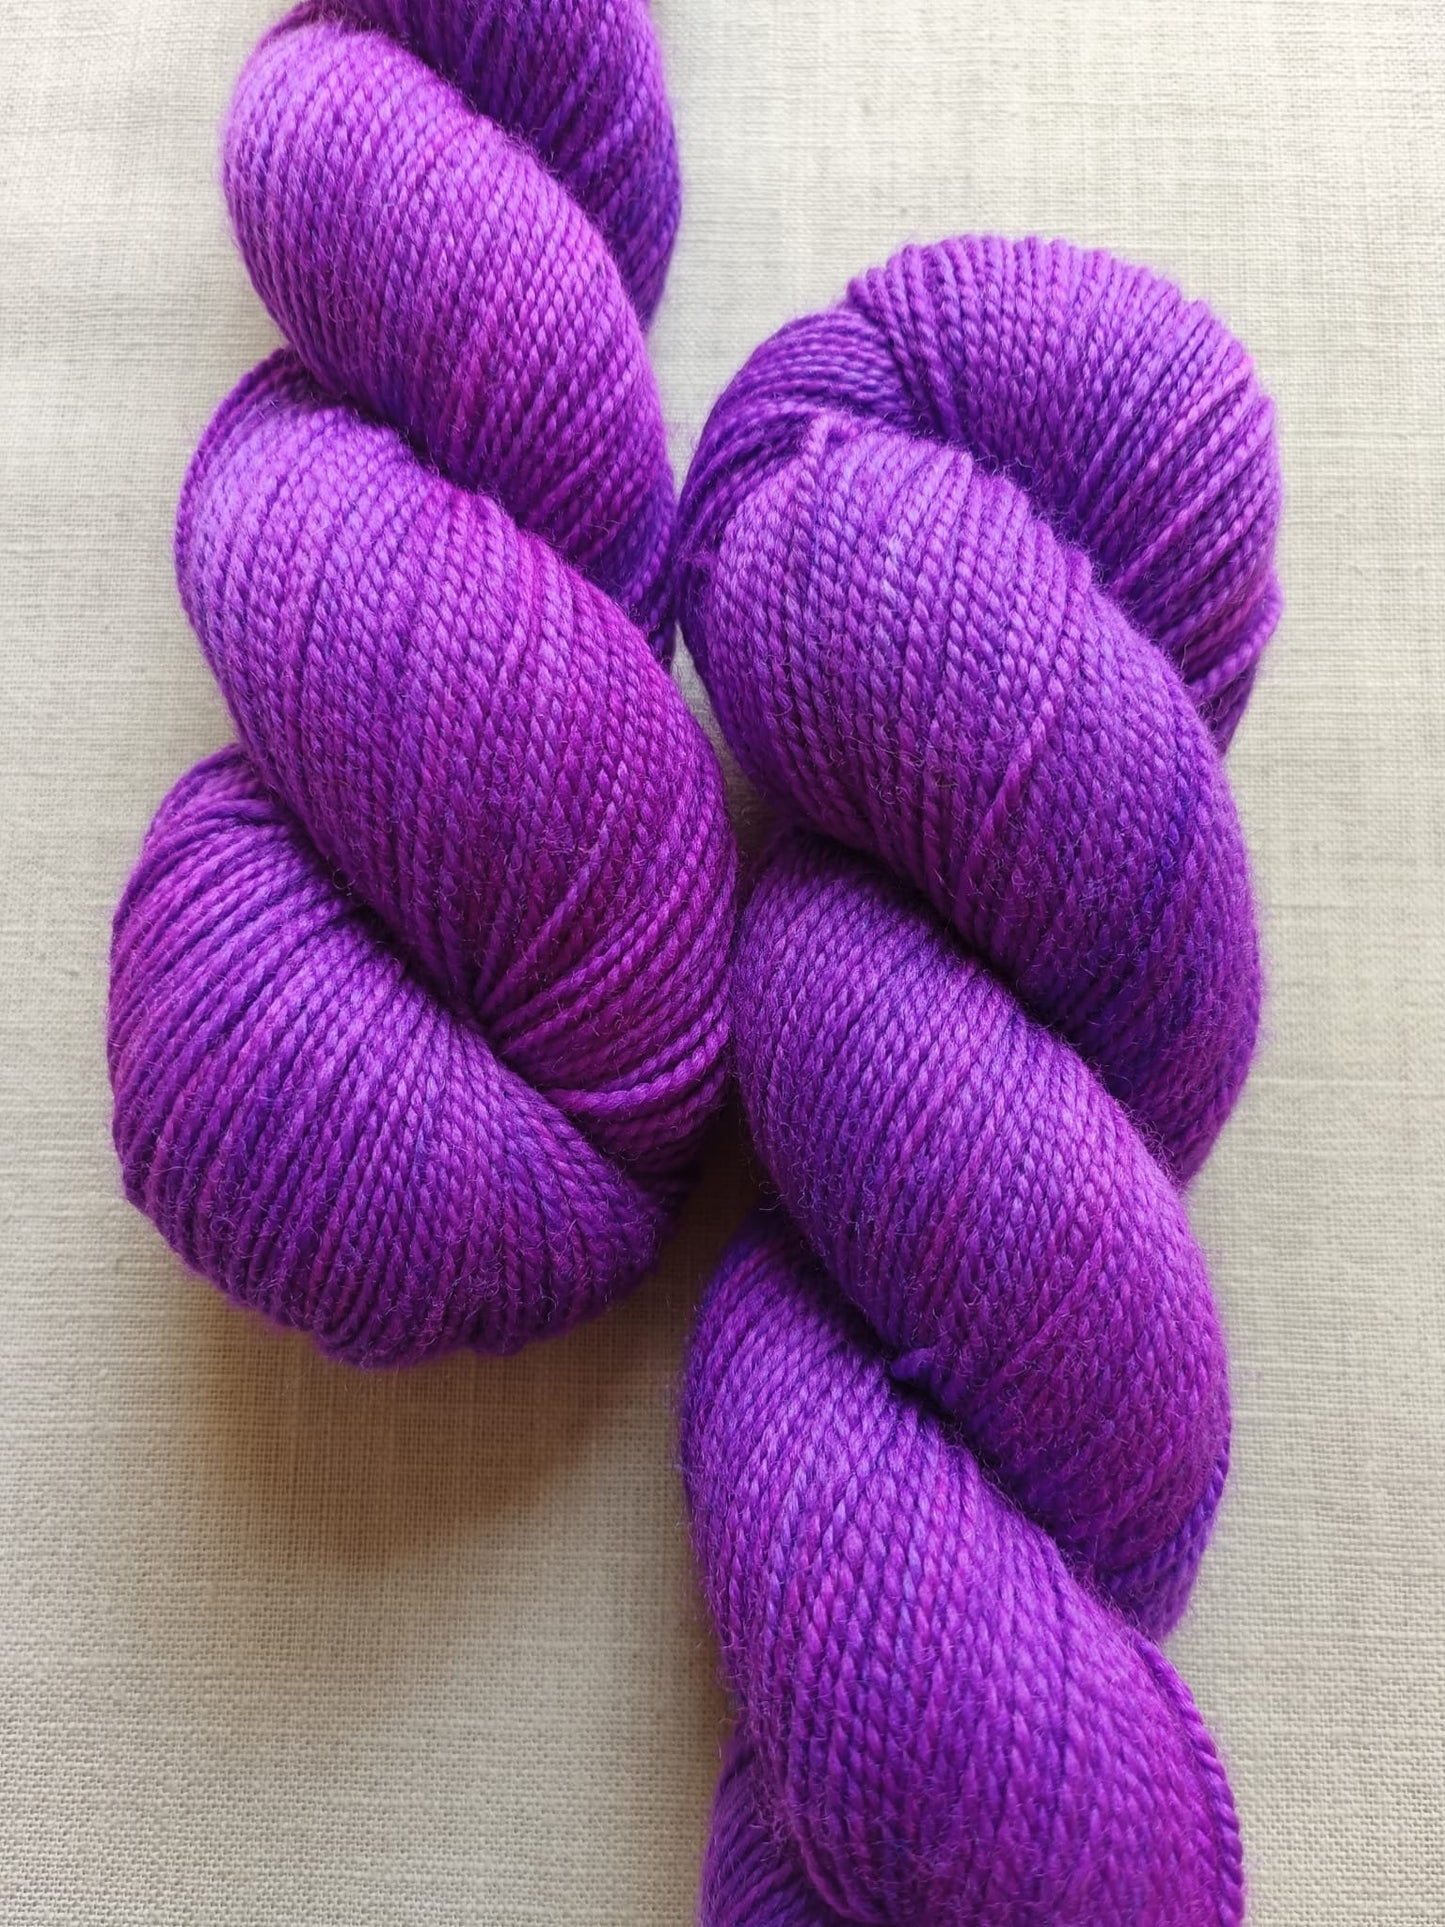 The Purple - Gallus Sock